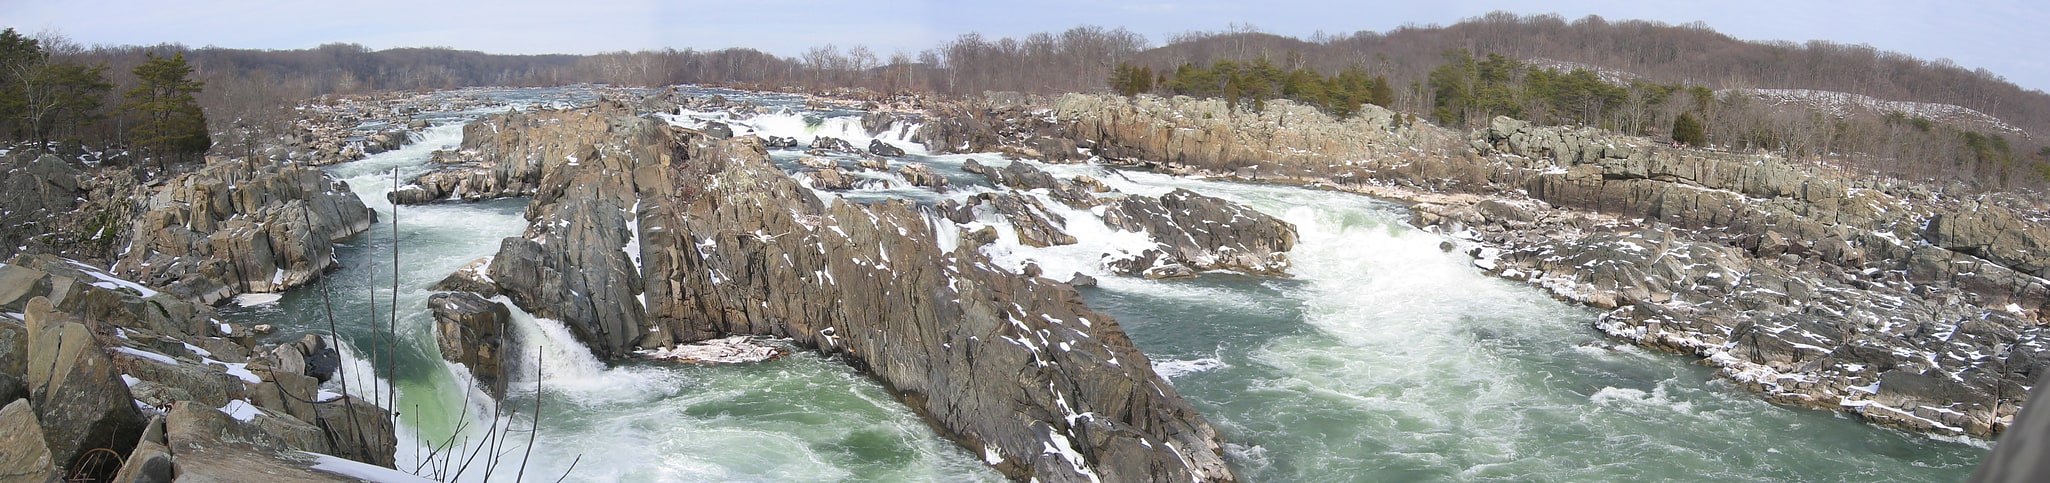 Great Falls, États-Unis